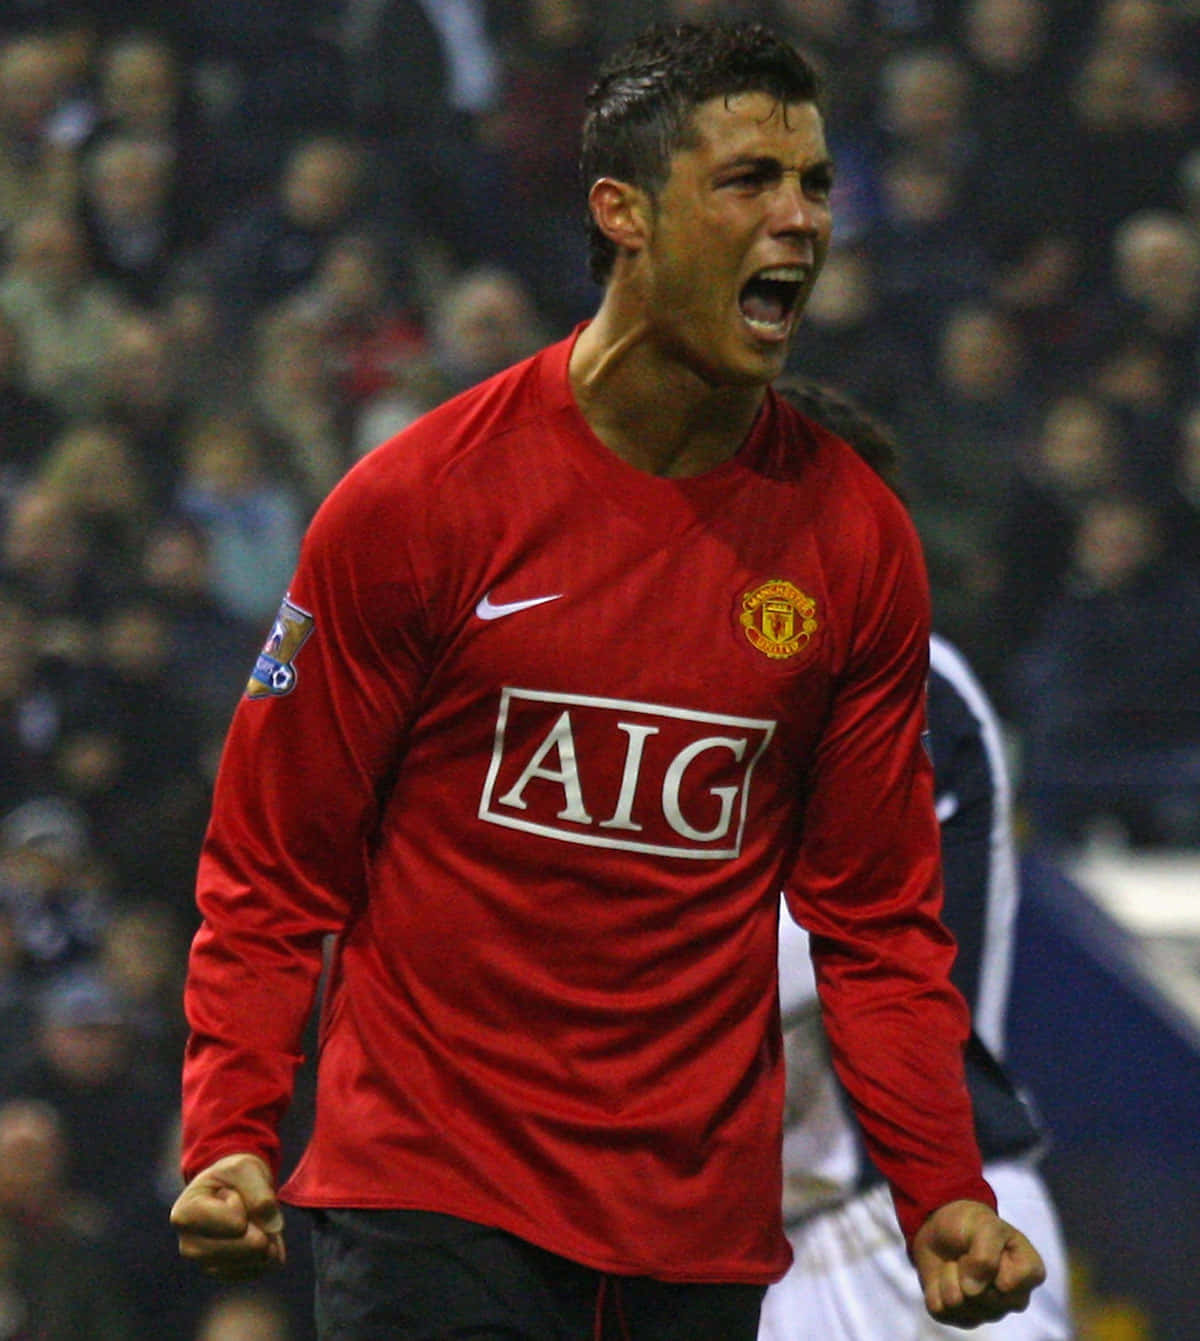 Cristiano Ronaldo celebrating a victory on the field